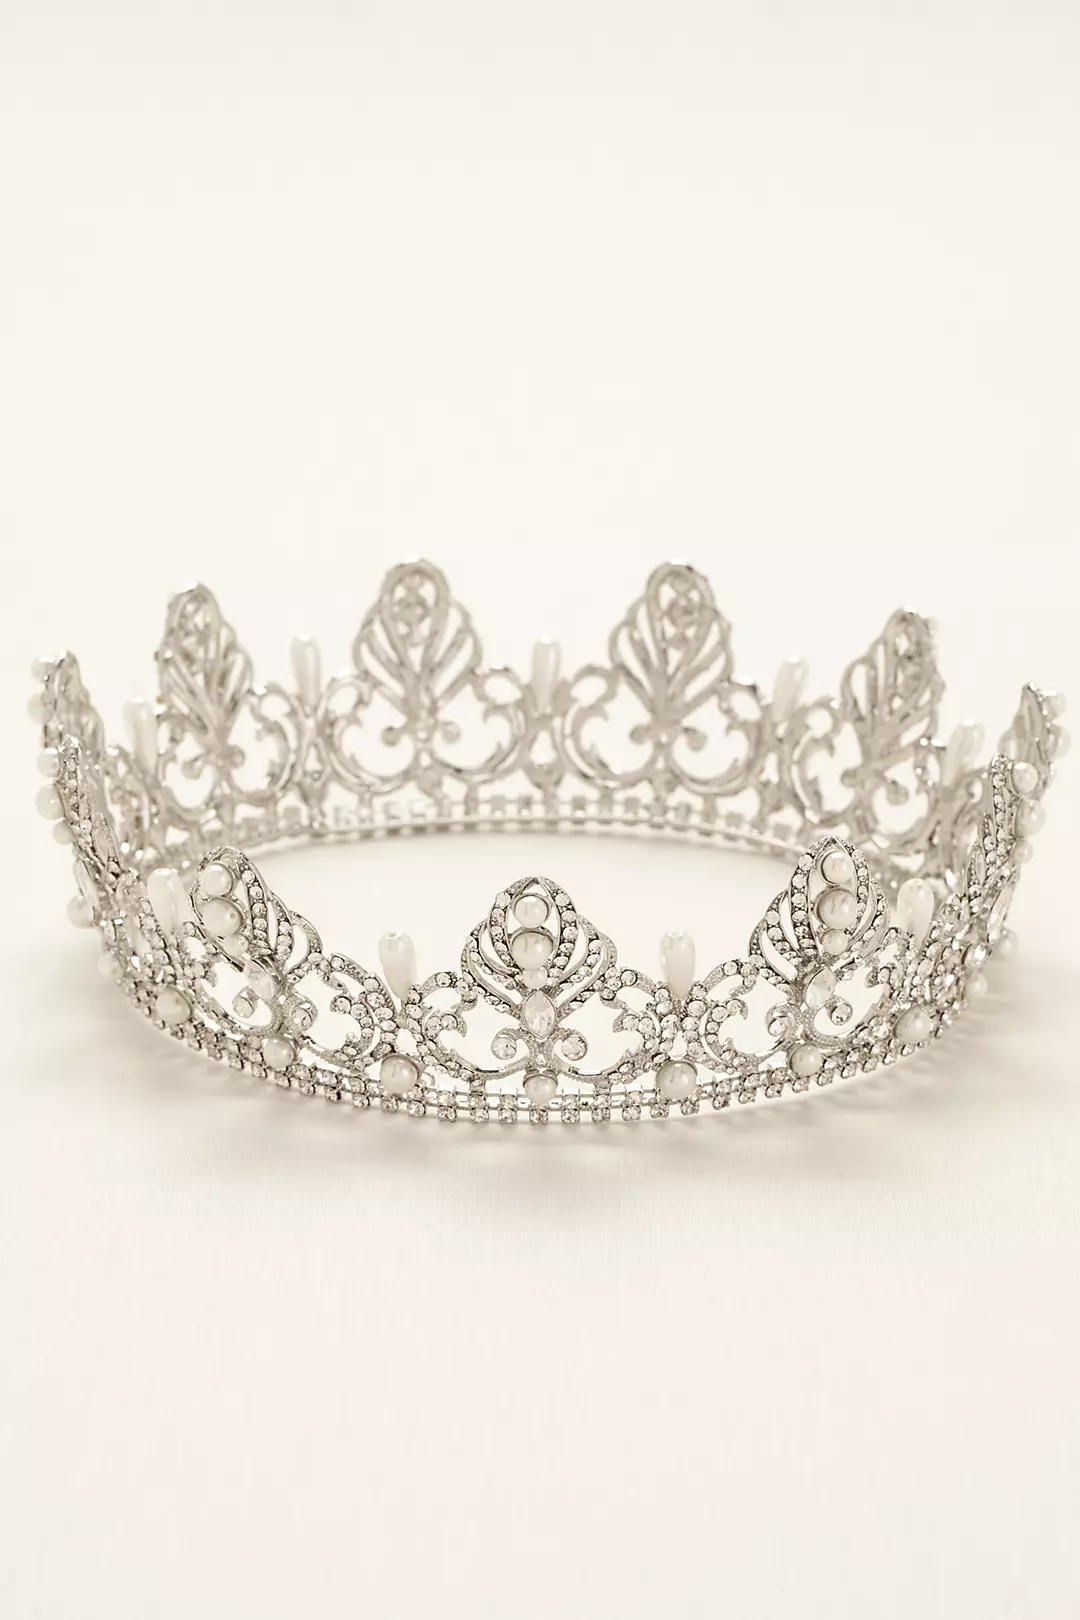 Pearl and Crystal Encrusted Crown Image 2